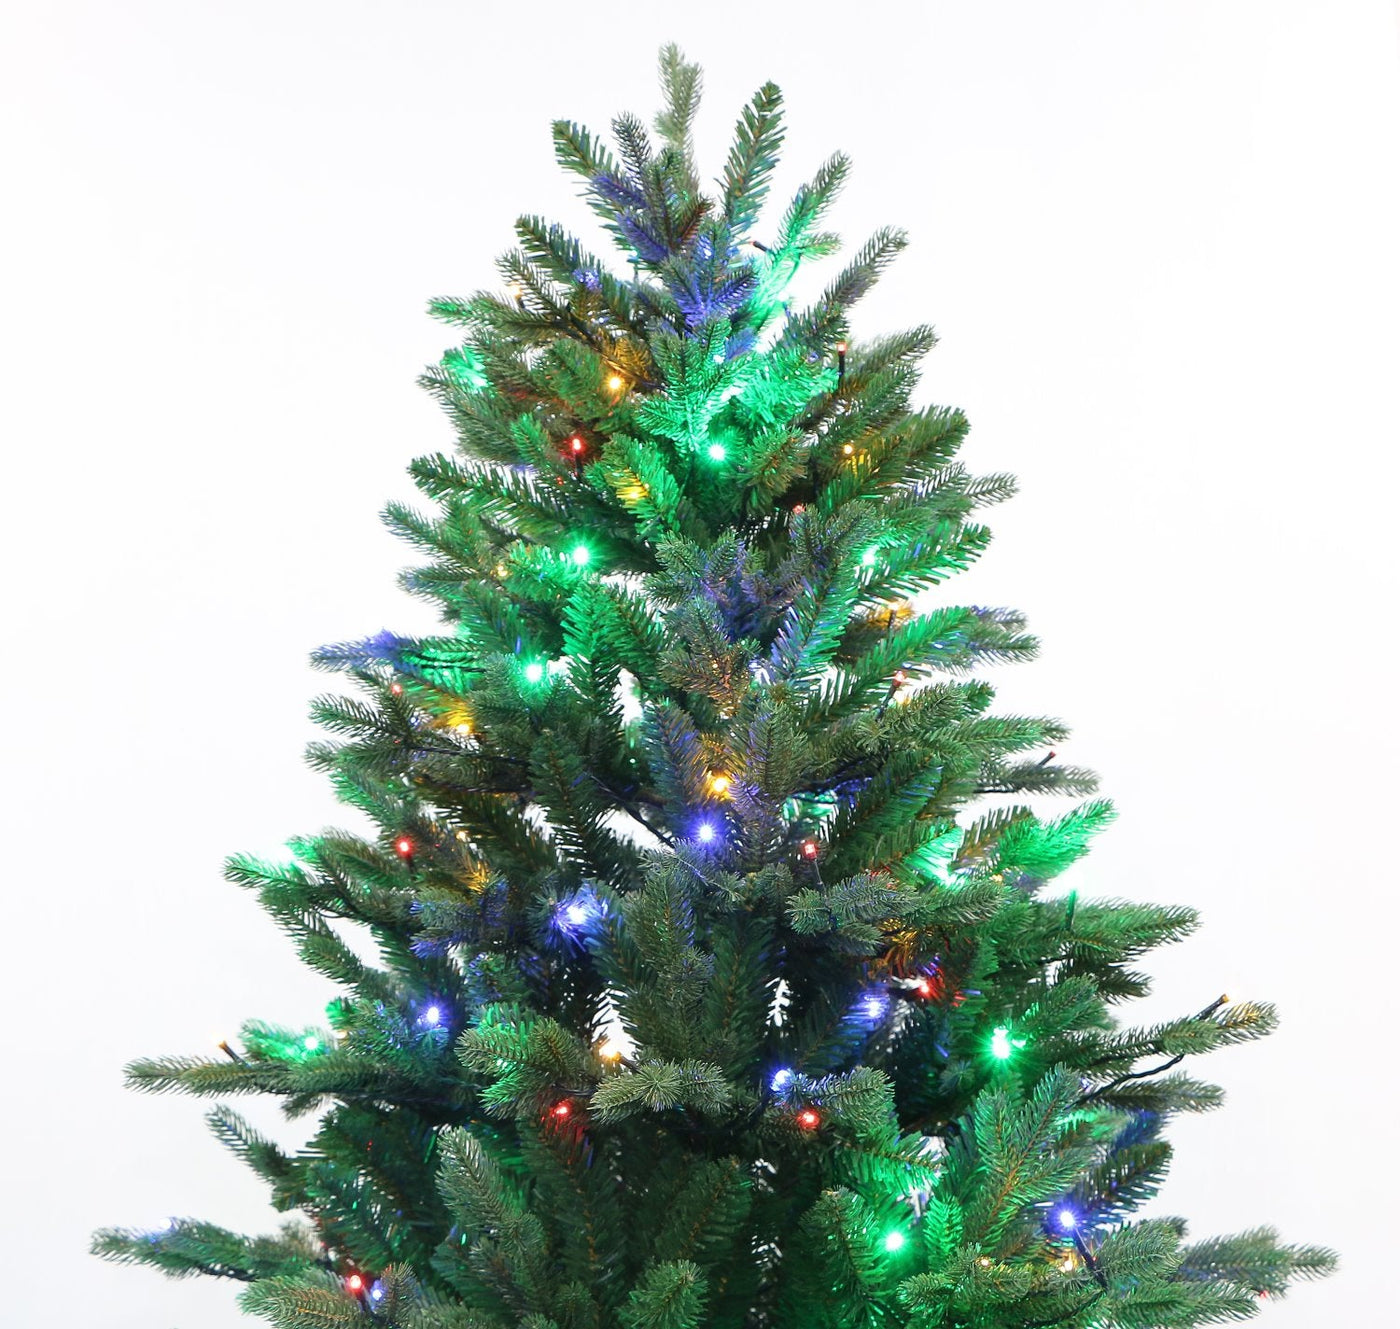 Silvan 6ft Forest Green Pine LED Pre-lit Christmas Tree - Warm White/Multi-coloured